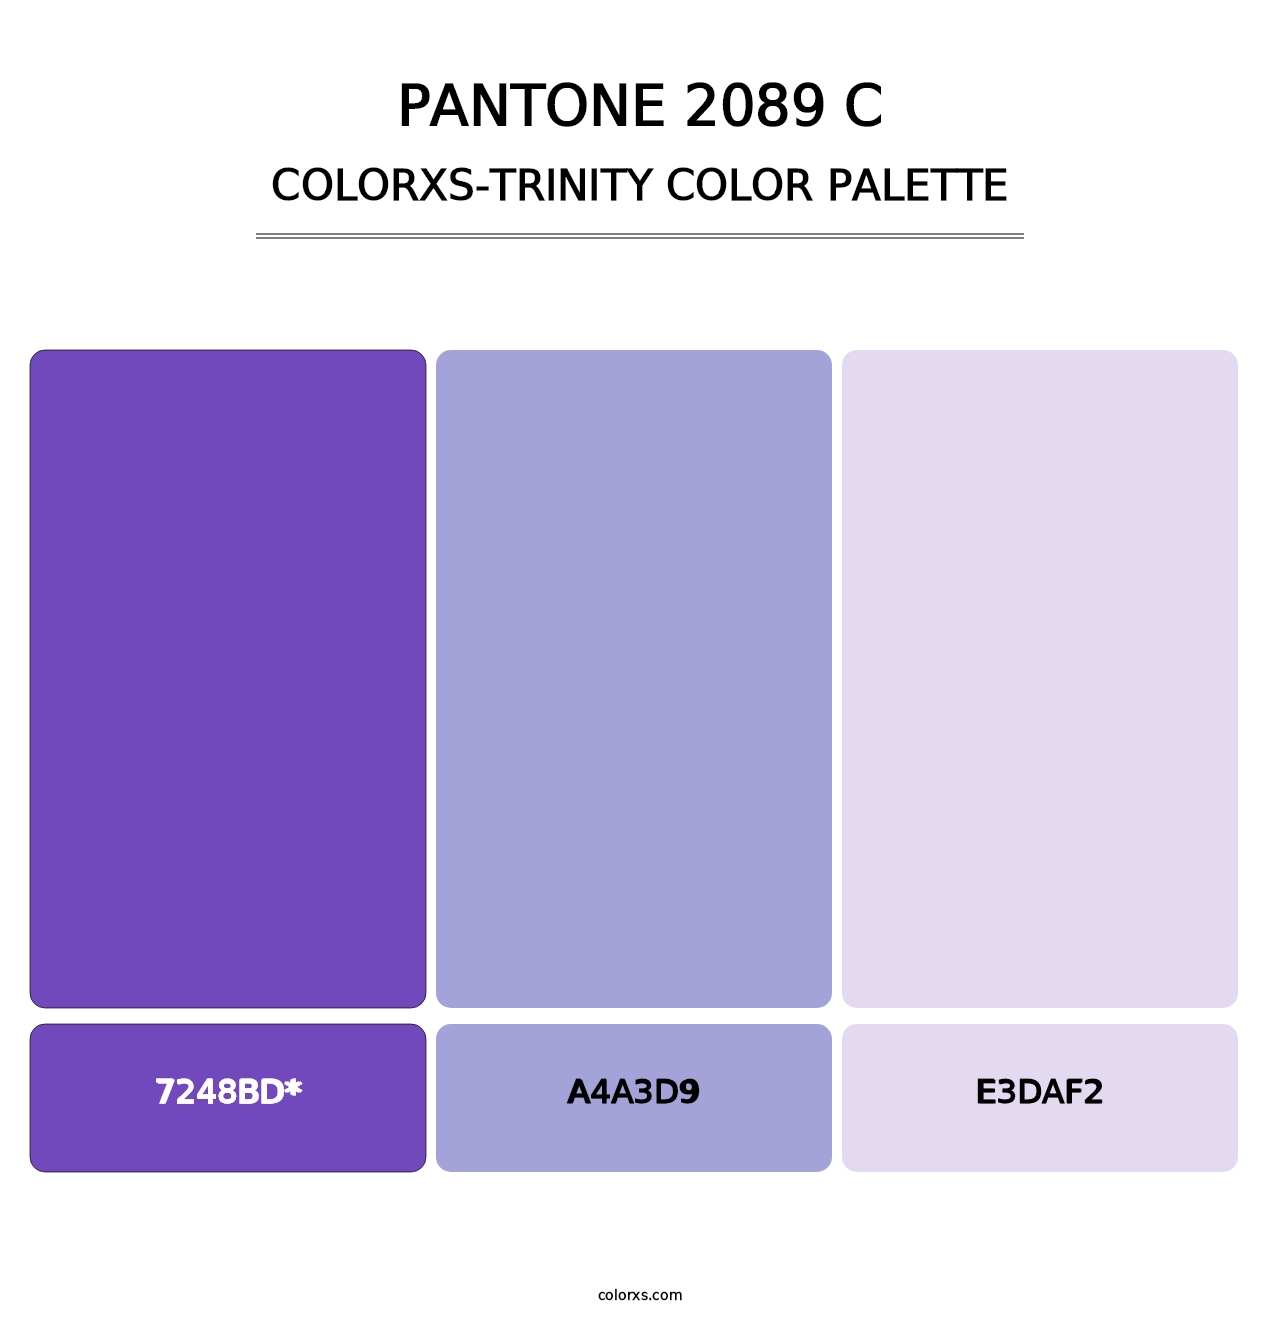 PANTONE 2089 C - Colorxs Trinity Palette